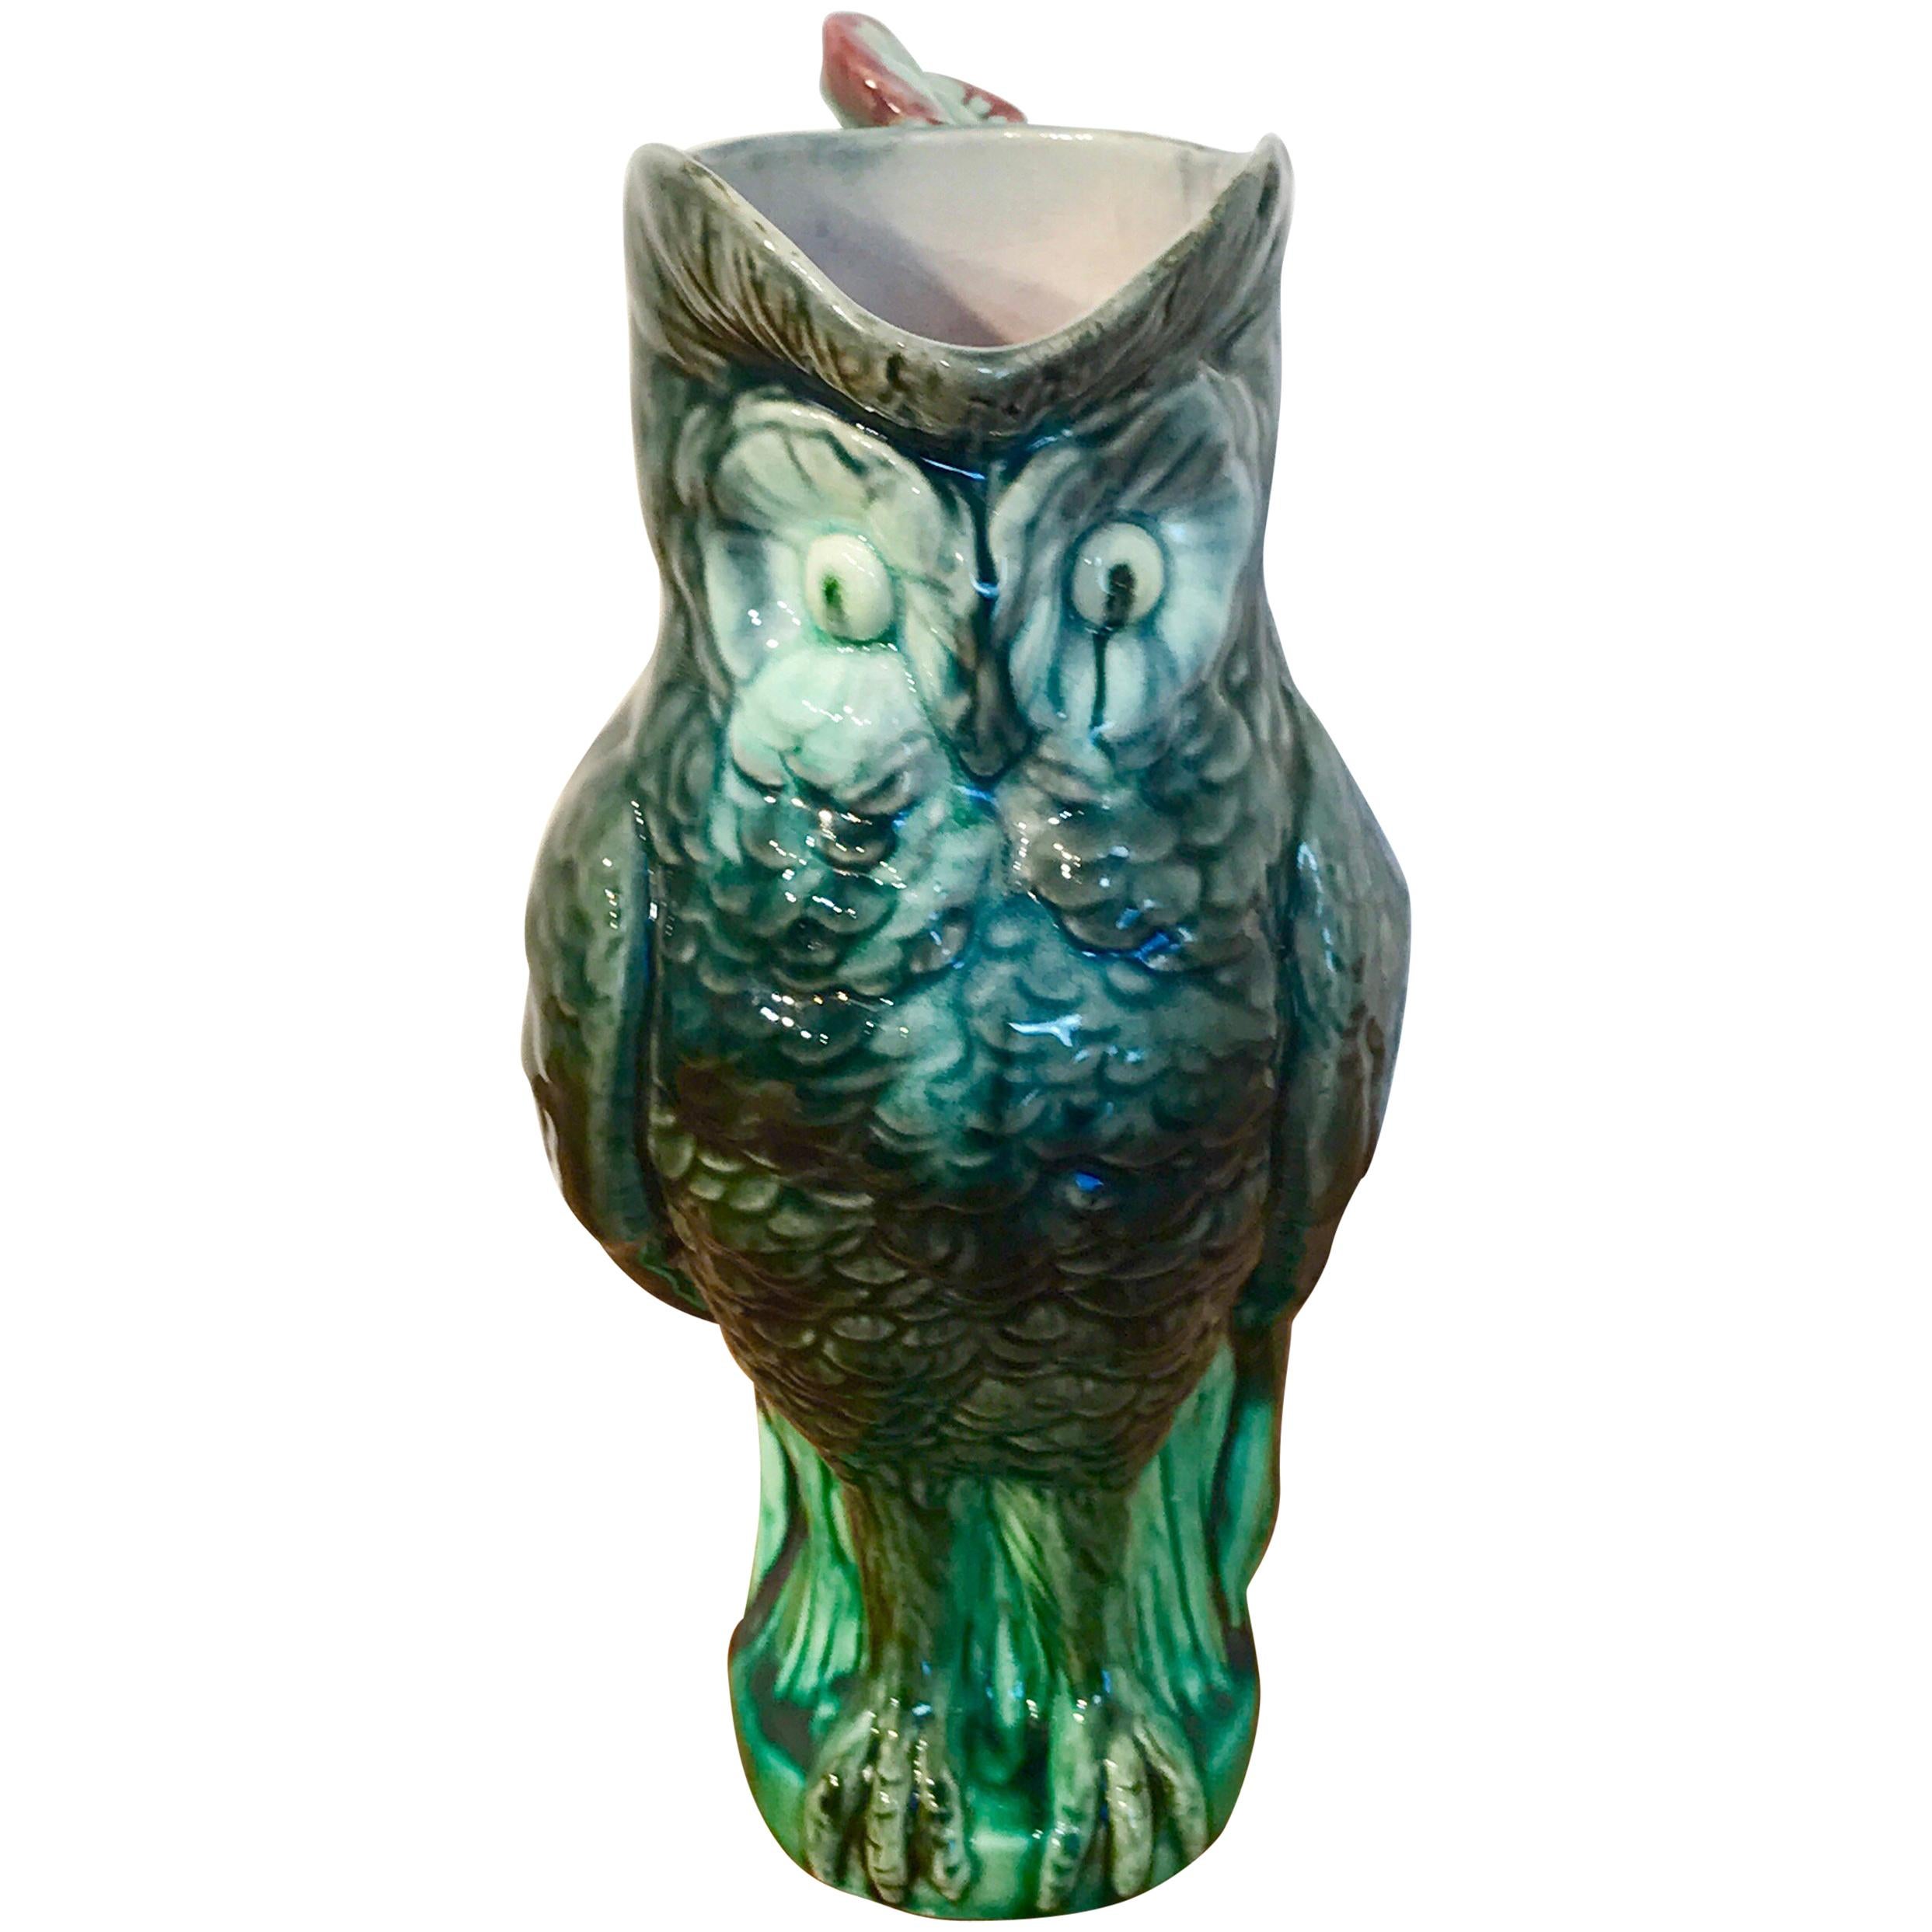 Antique English Majolica Owl Motif Pitcher